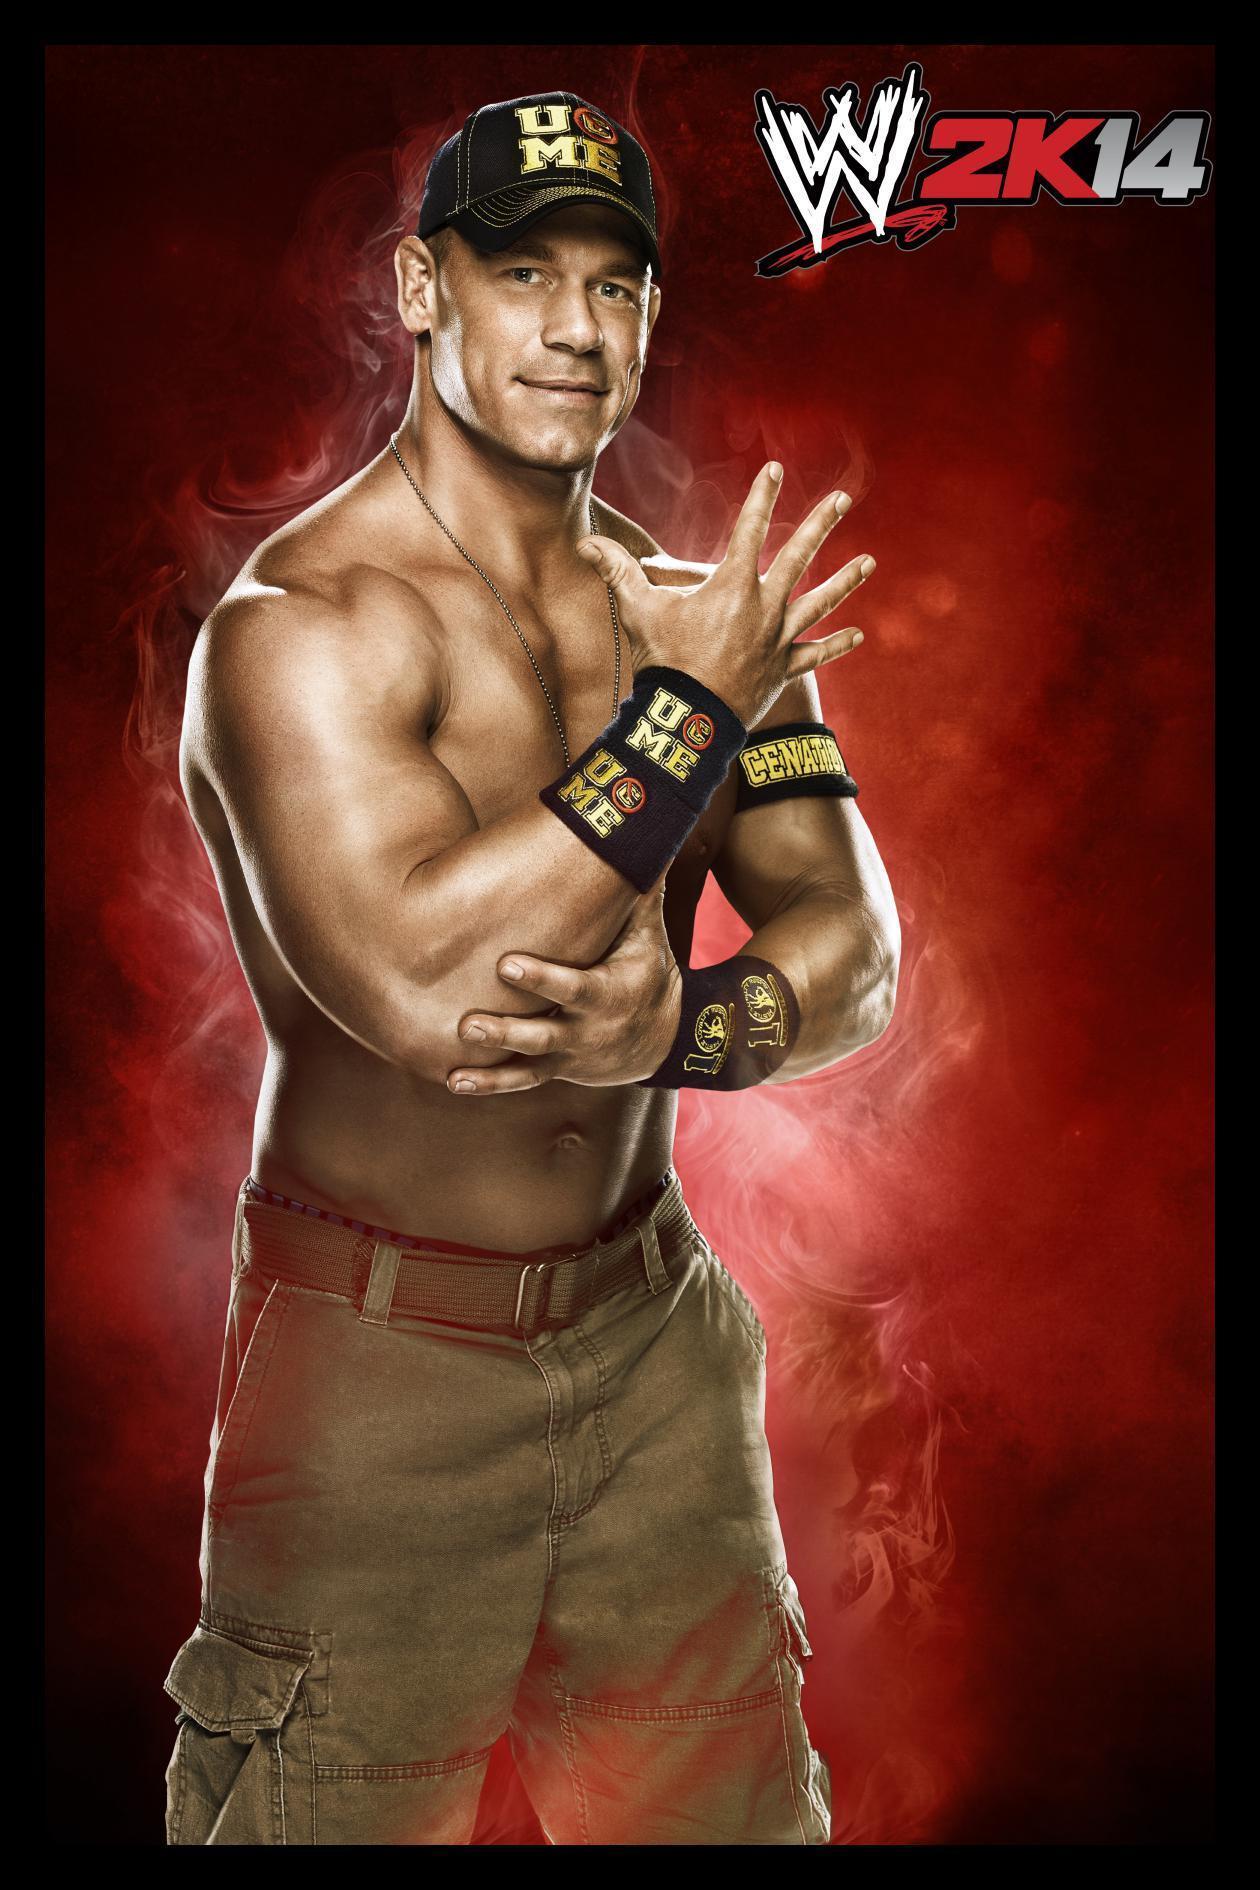 WWE John Cena Wallpapers 2015 HD - Wallpaper Cave